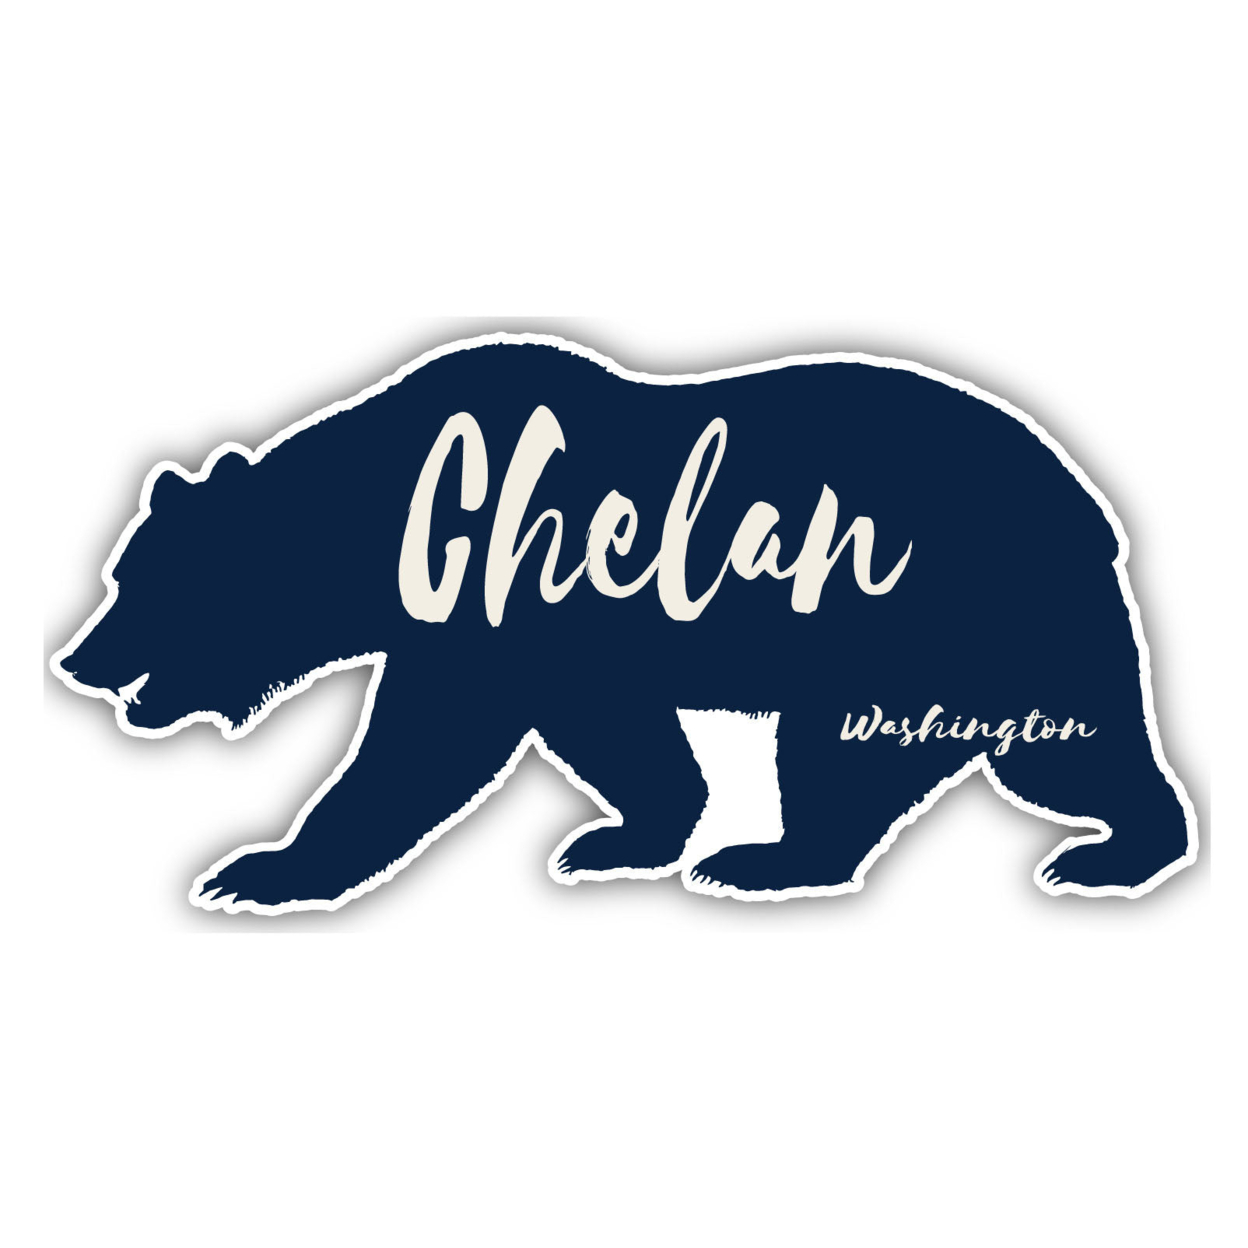 Chelan Washington Souvenir Decorative Stickers (Choose Theme And Size) - Single Unit, 12-Inch, Camp Life